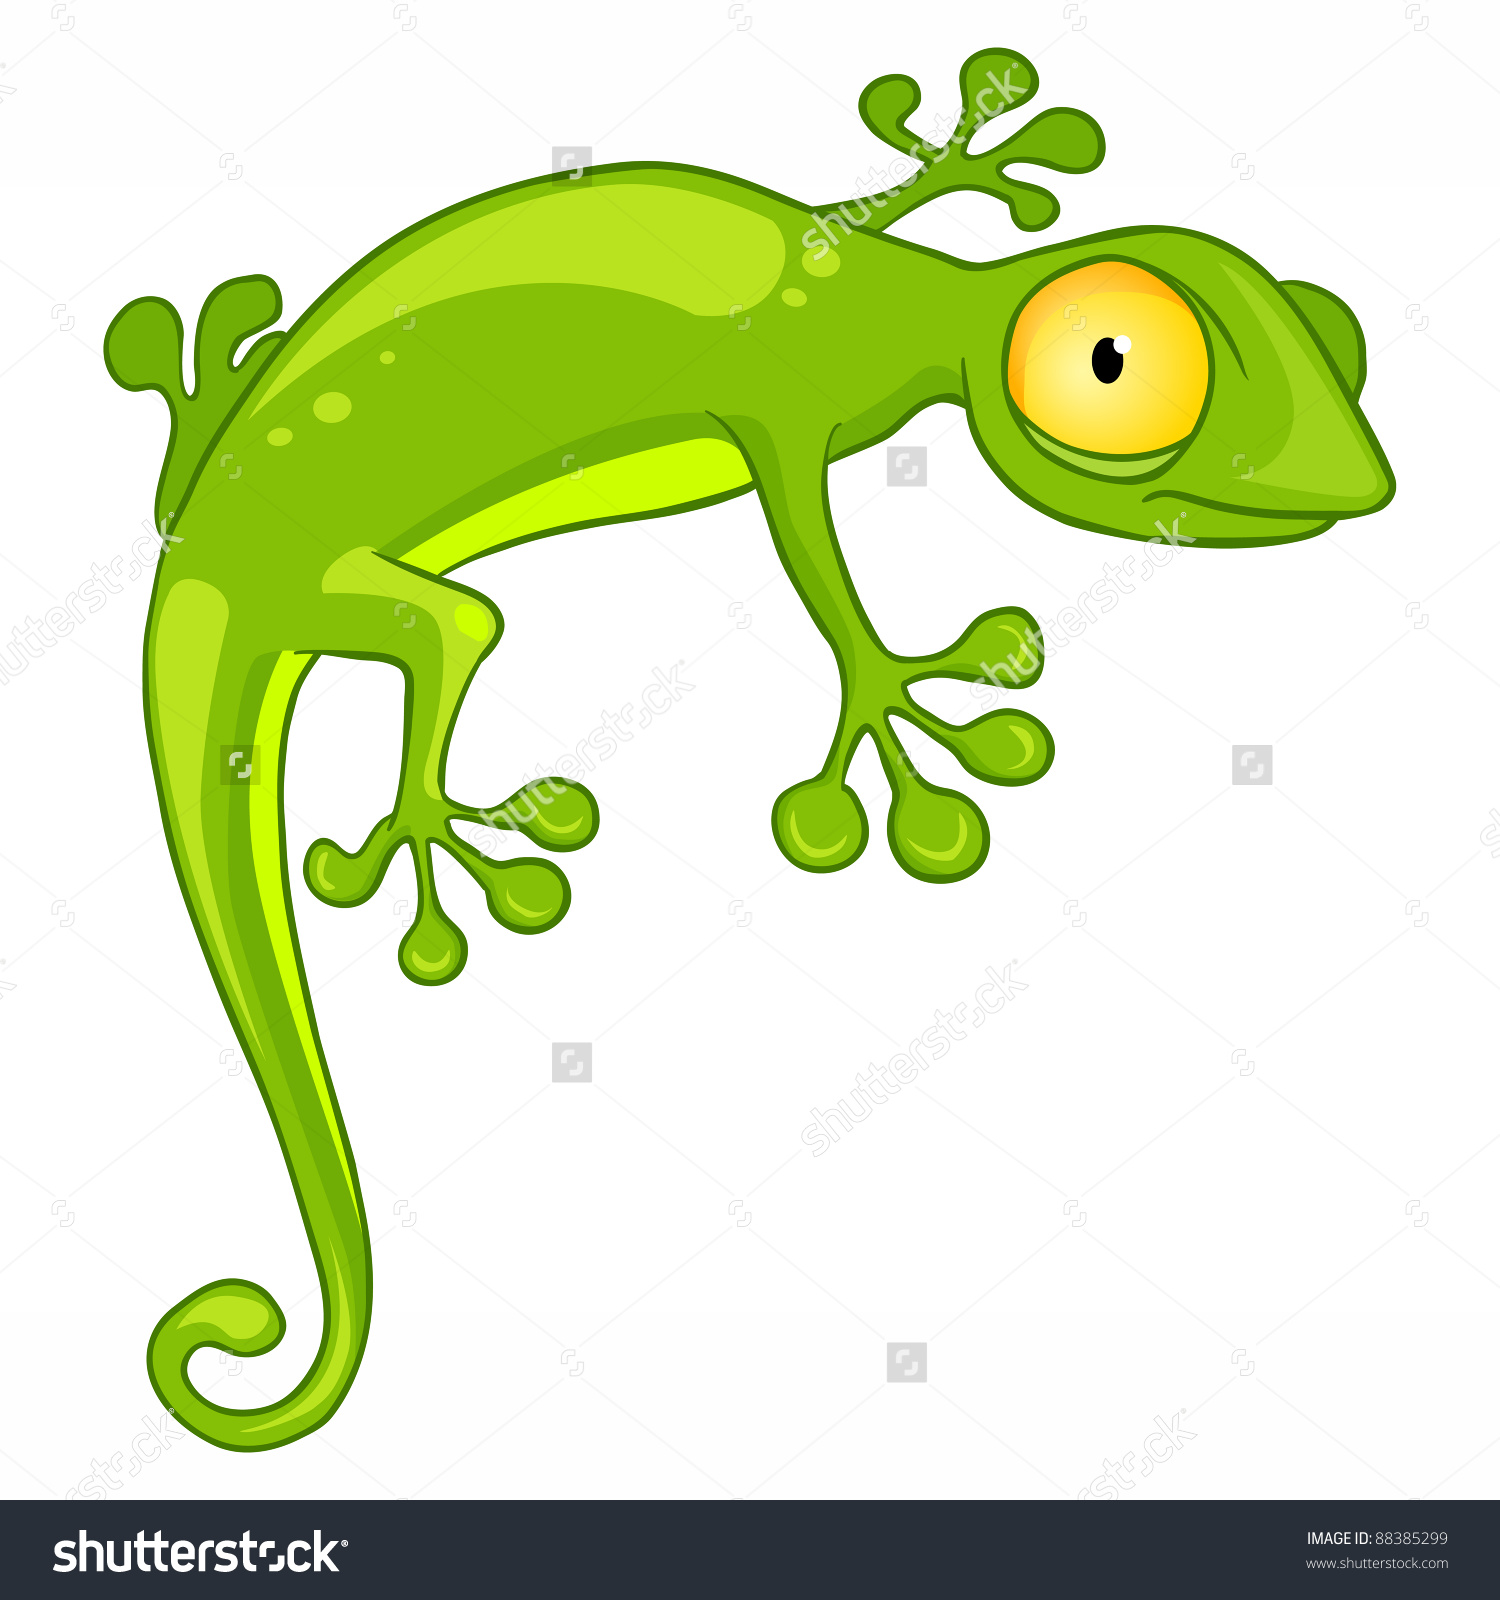 Lizard clipart small lizard. Cute free download best